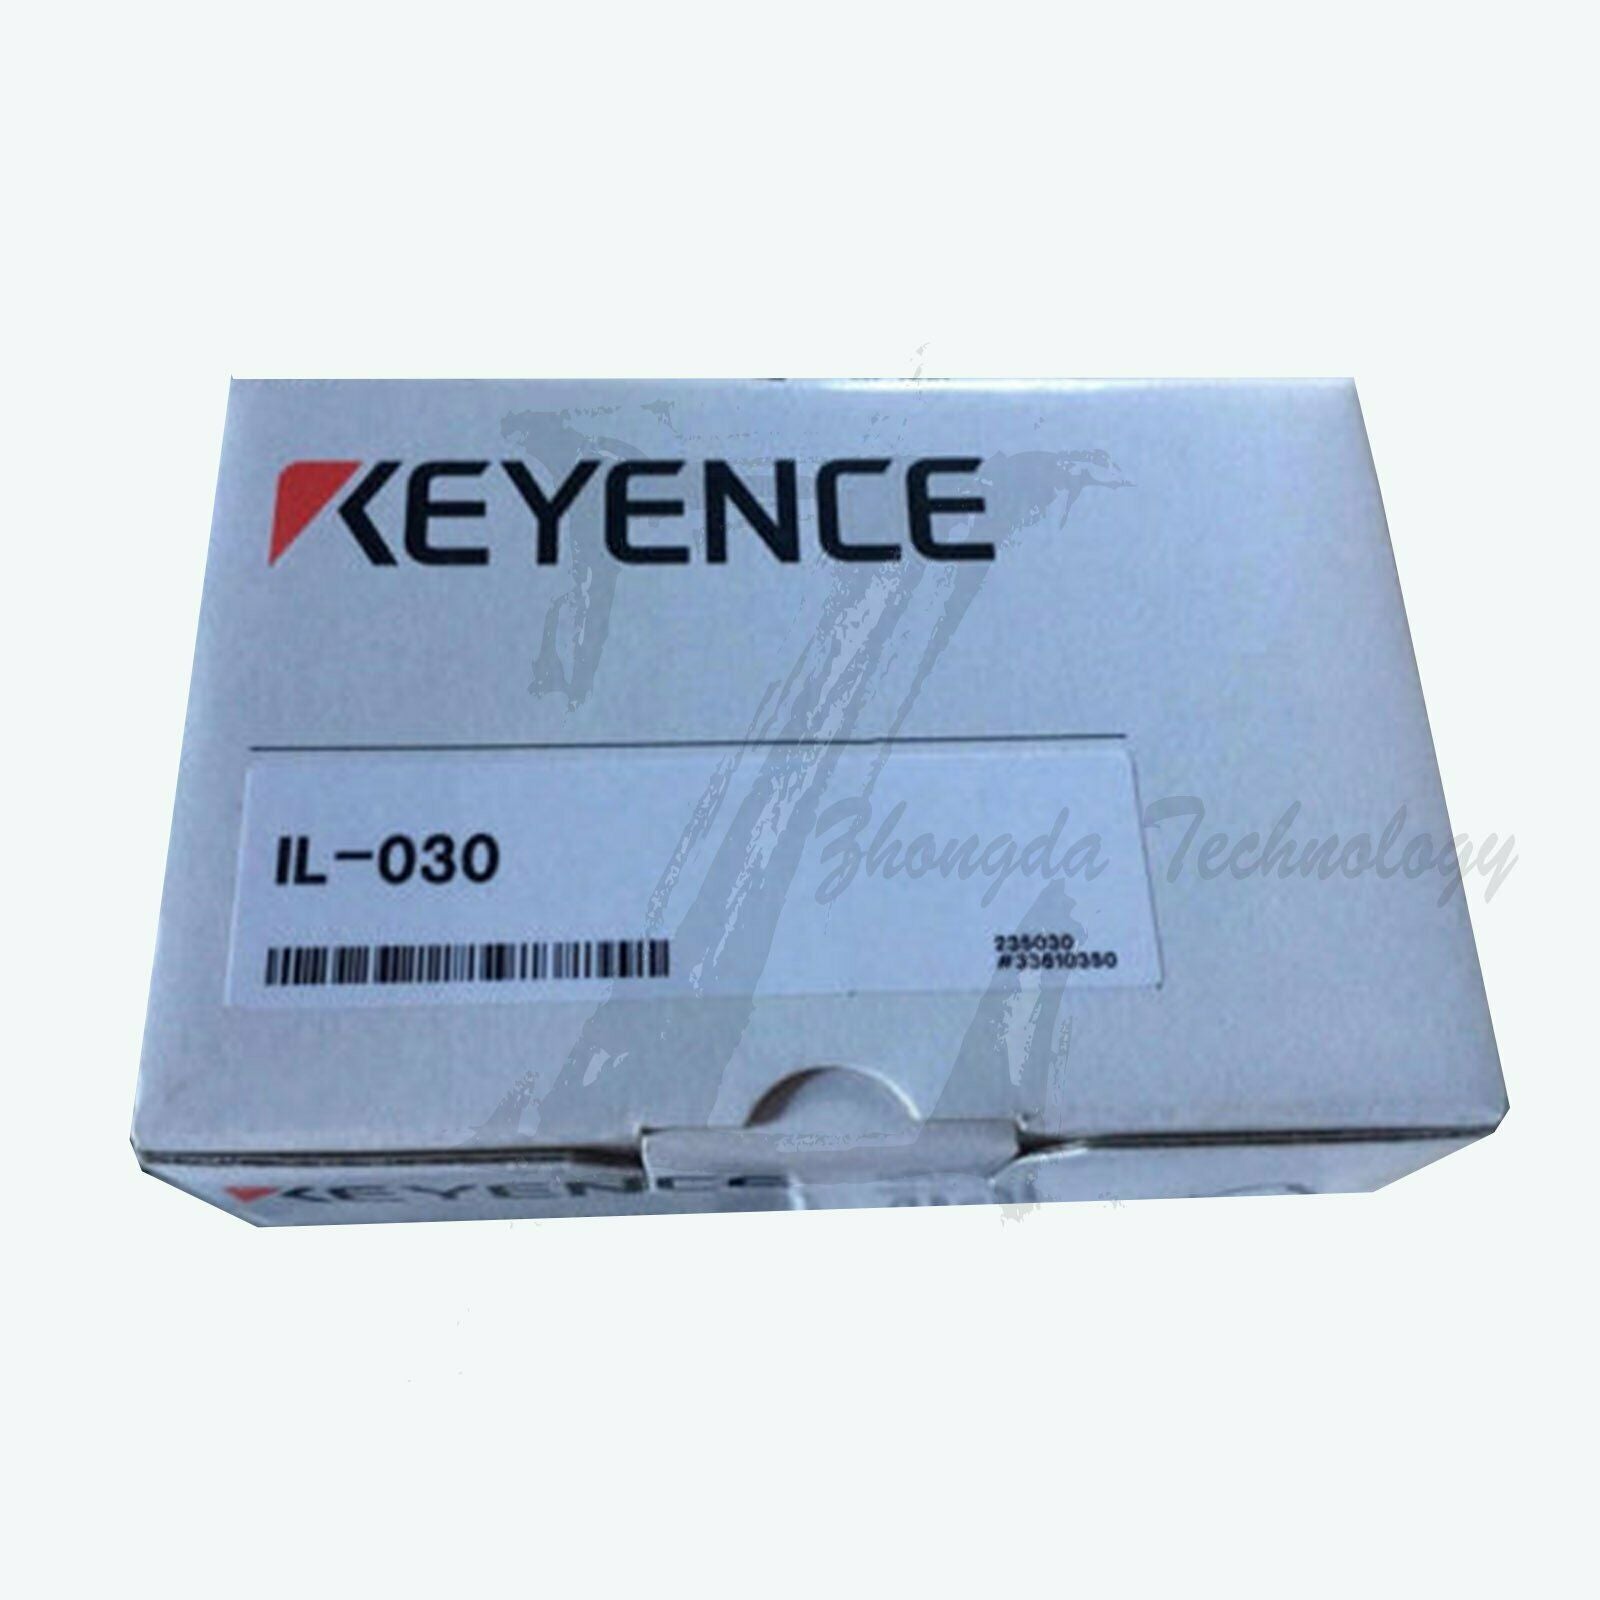 1pcs NEW KEYENCE IL-030 Digital fiber optic sensor KOEED 500+, 90%, import_2020_10_10_031751, Keyence, Other, validate-product-description